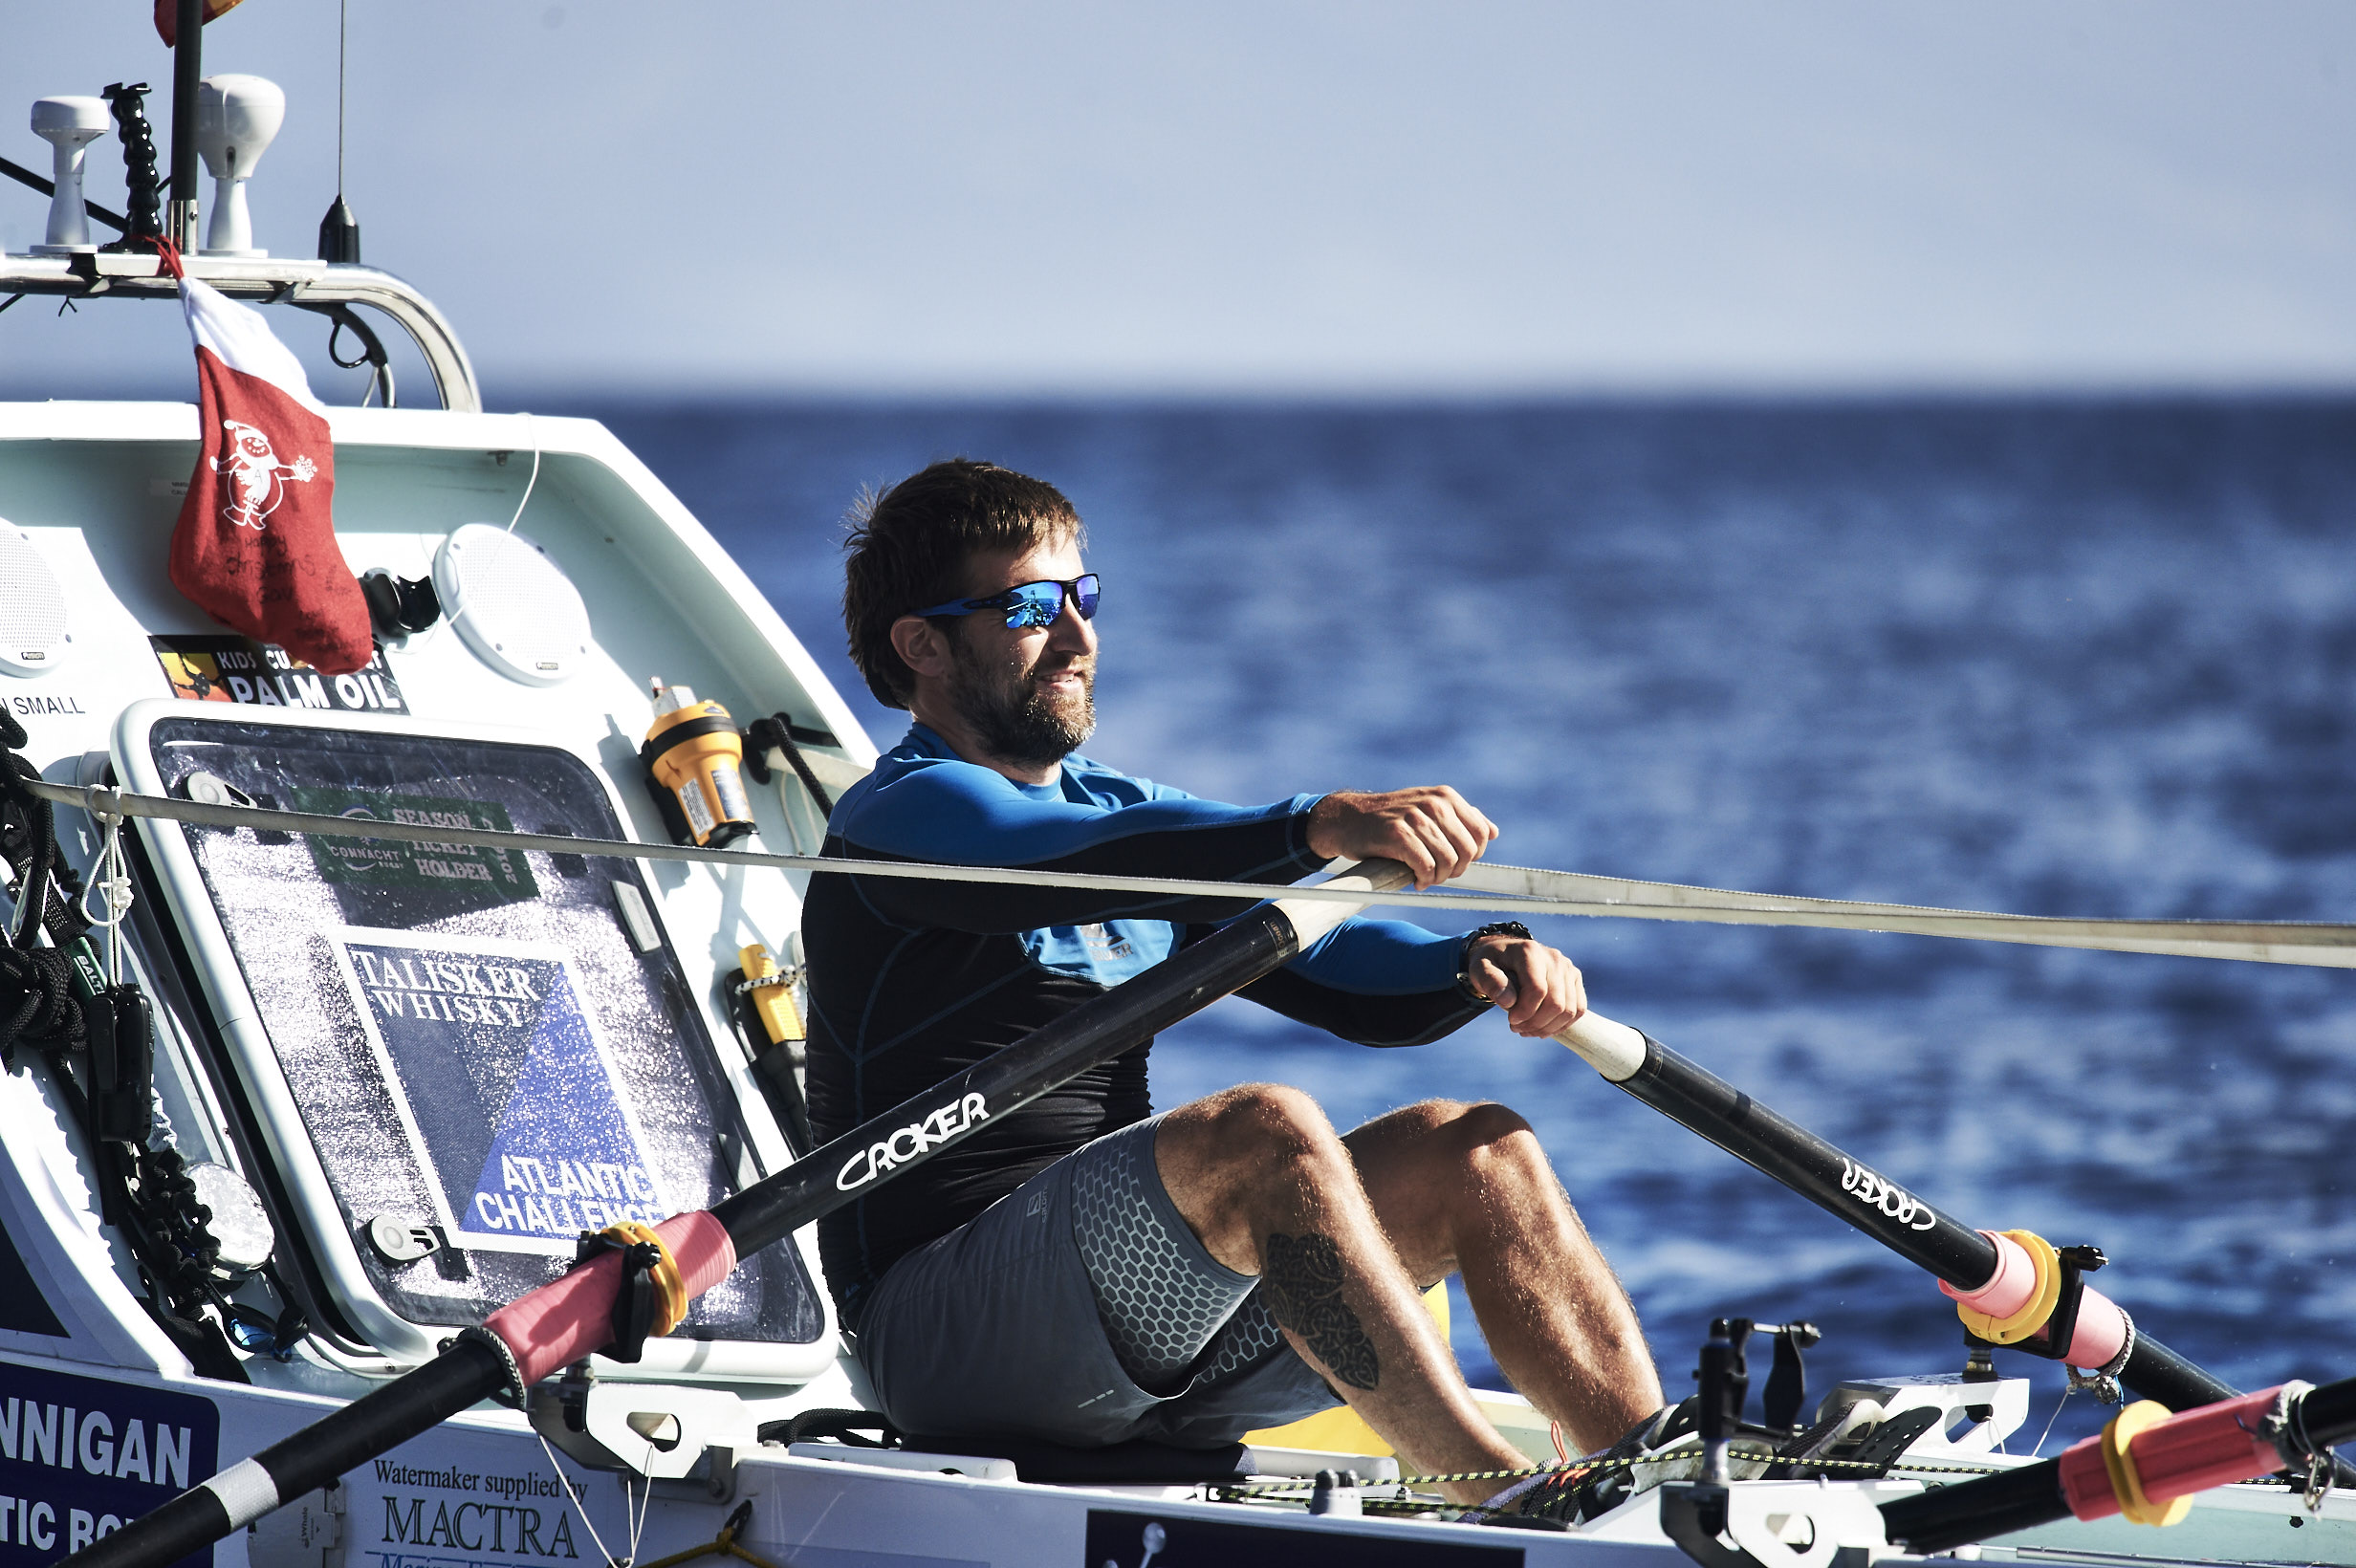 Gavan Hennigan rowing the Atlantic 